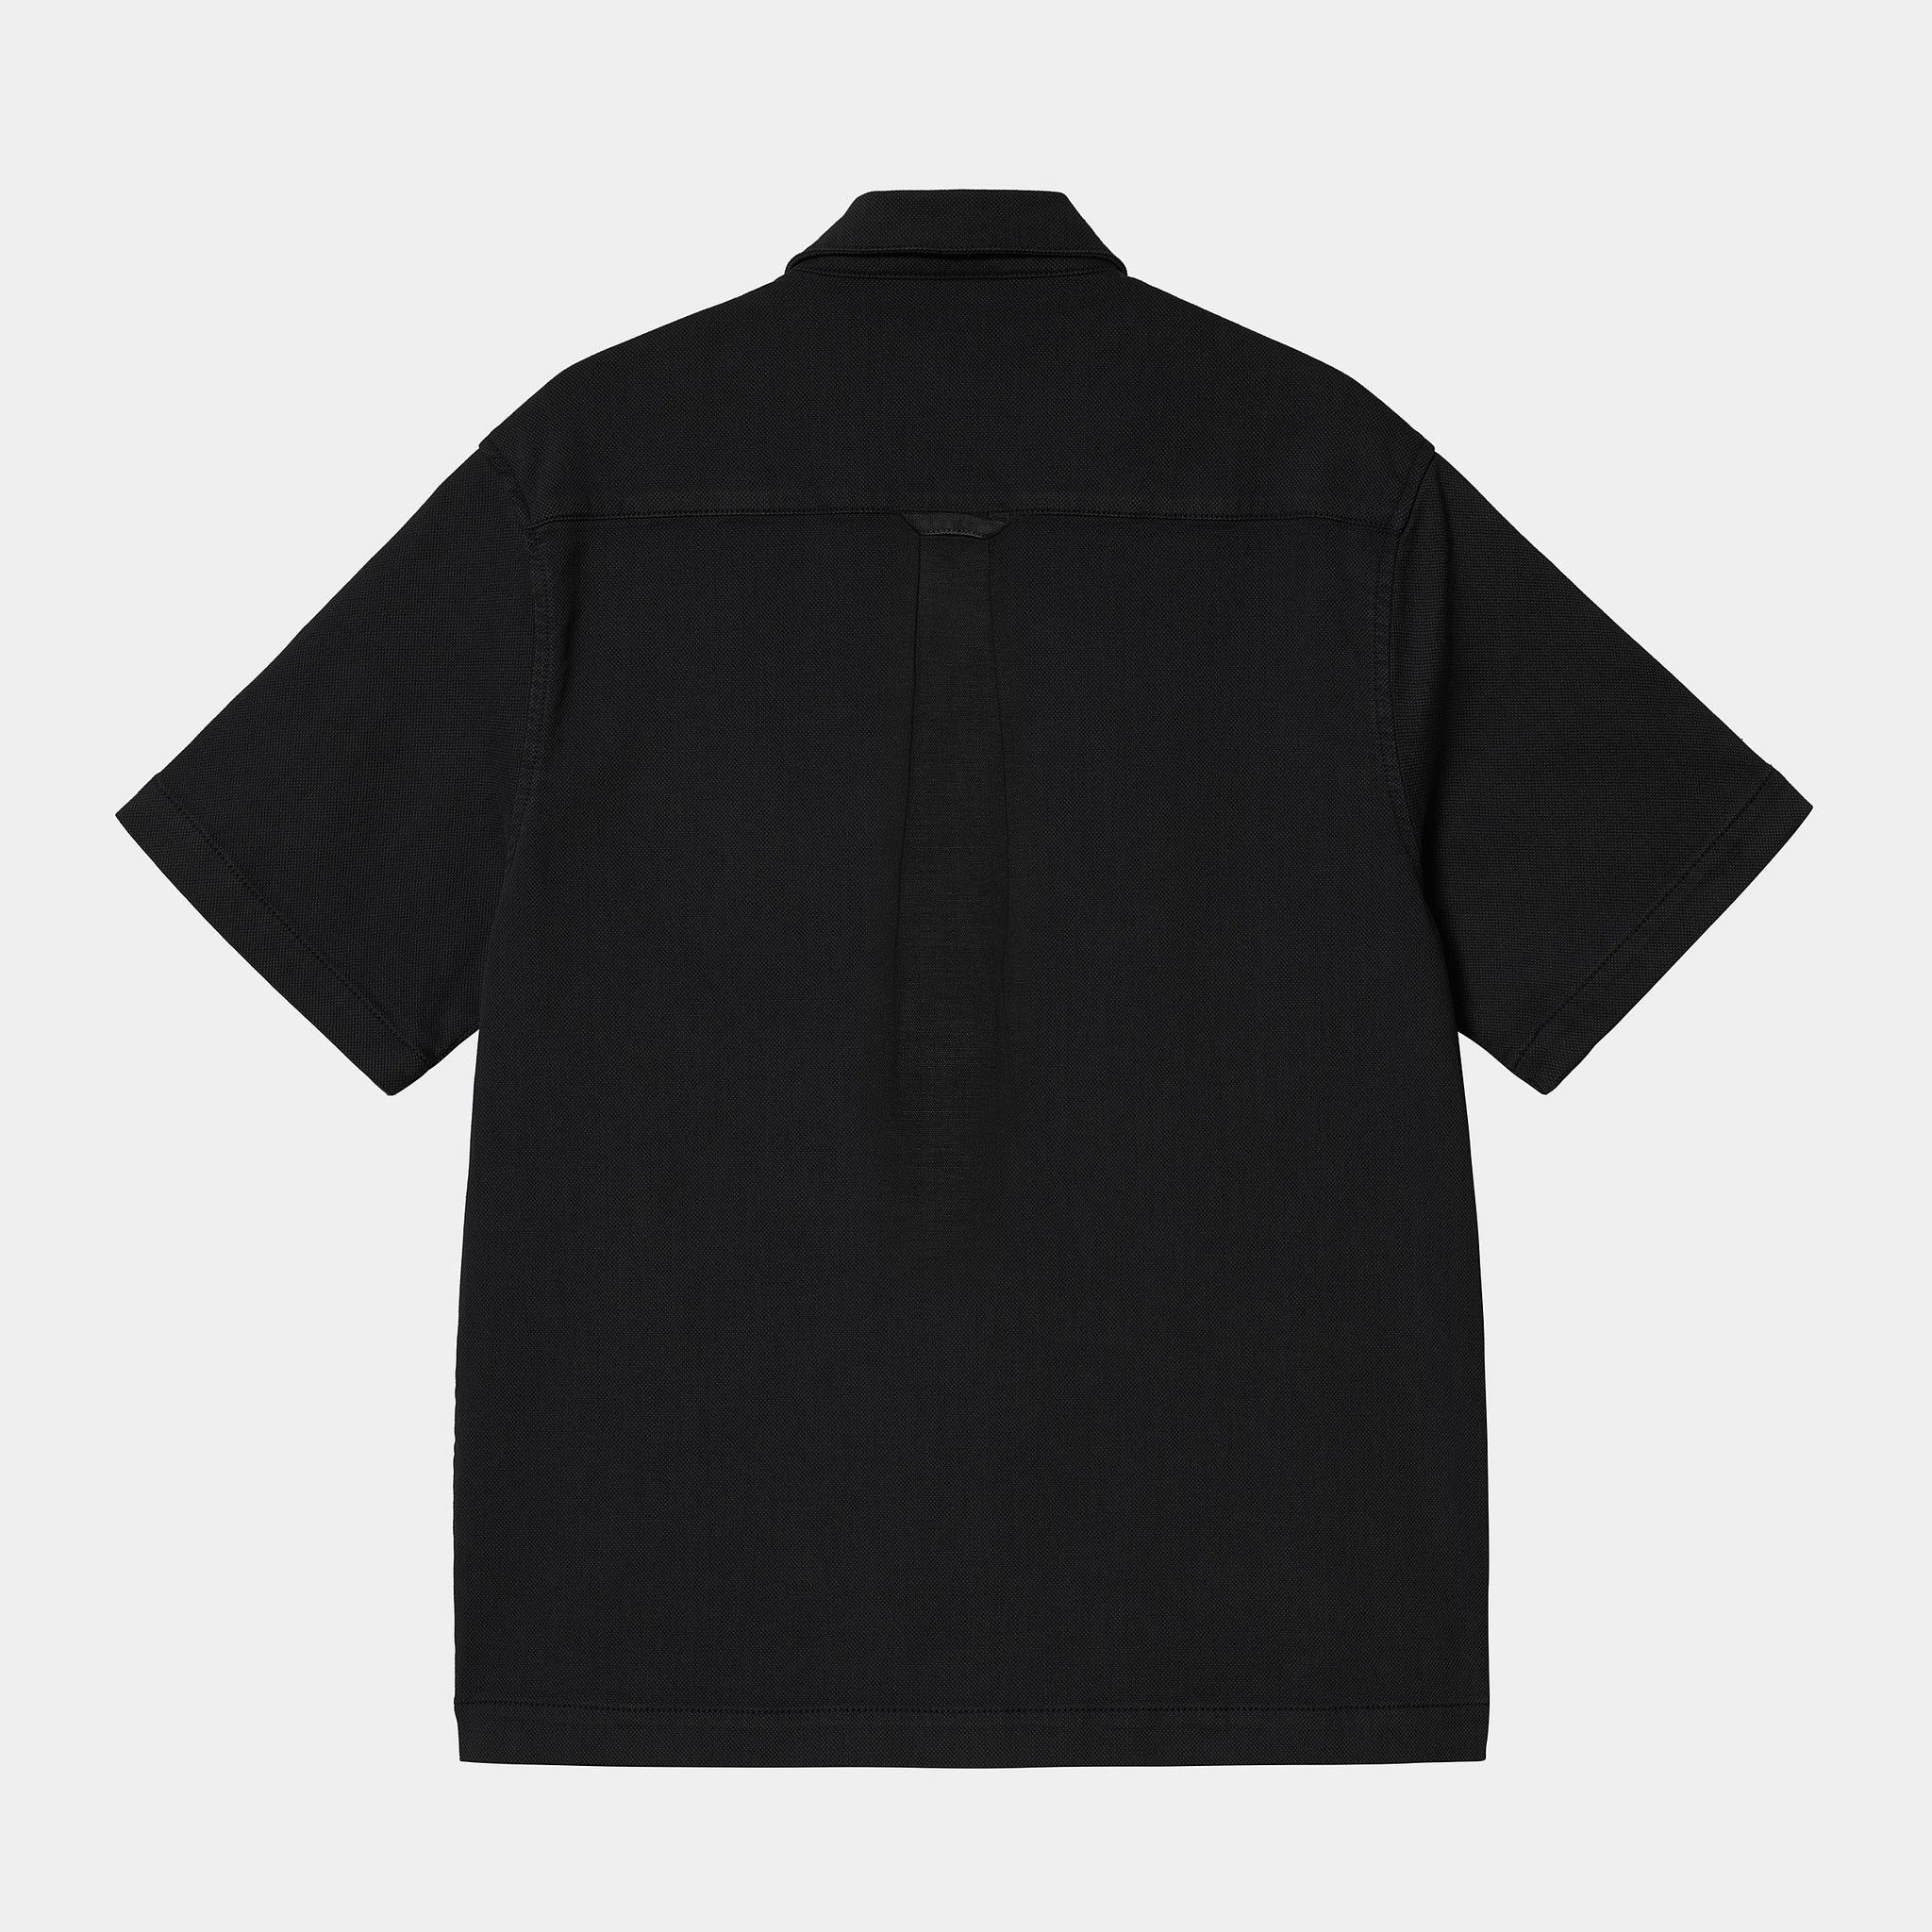 Carhartt S/S Craft Shirt Black